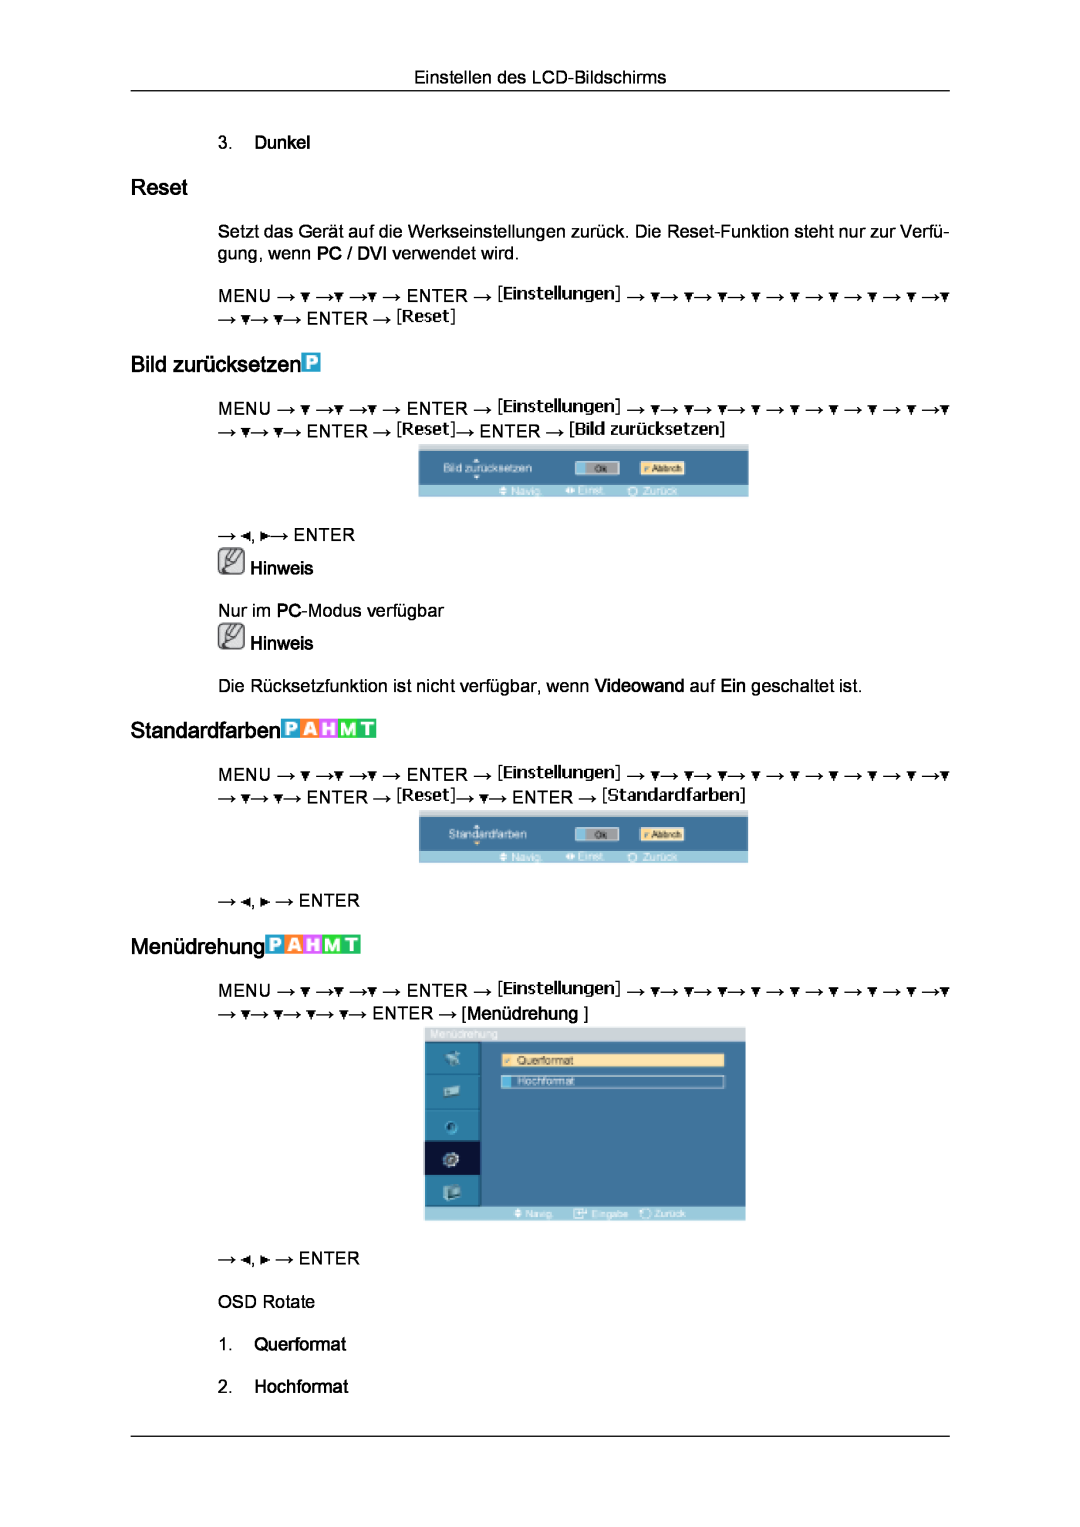 Samsung LH32MGQLBC/EN manual Reset, Bild zurücksetzen, Standardfarben, Dunkel, →→ → → → ENTER → Menüdrehung, Hinweis 